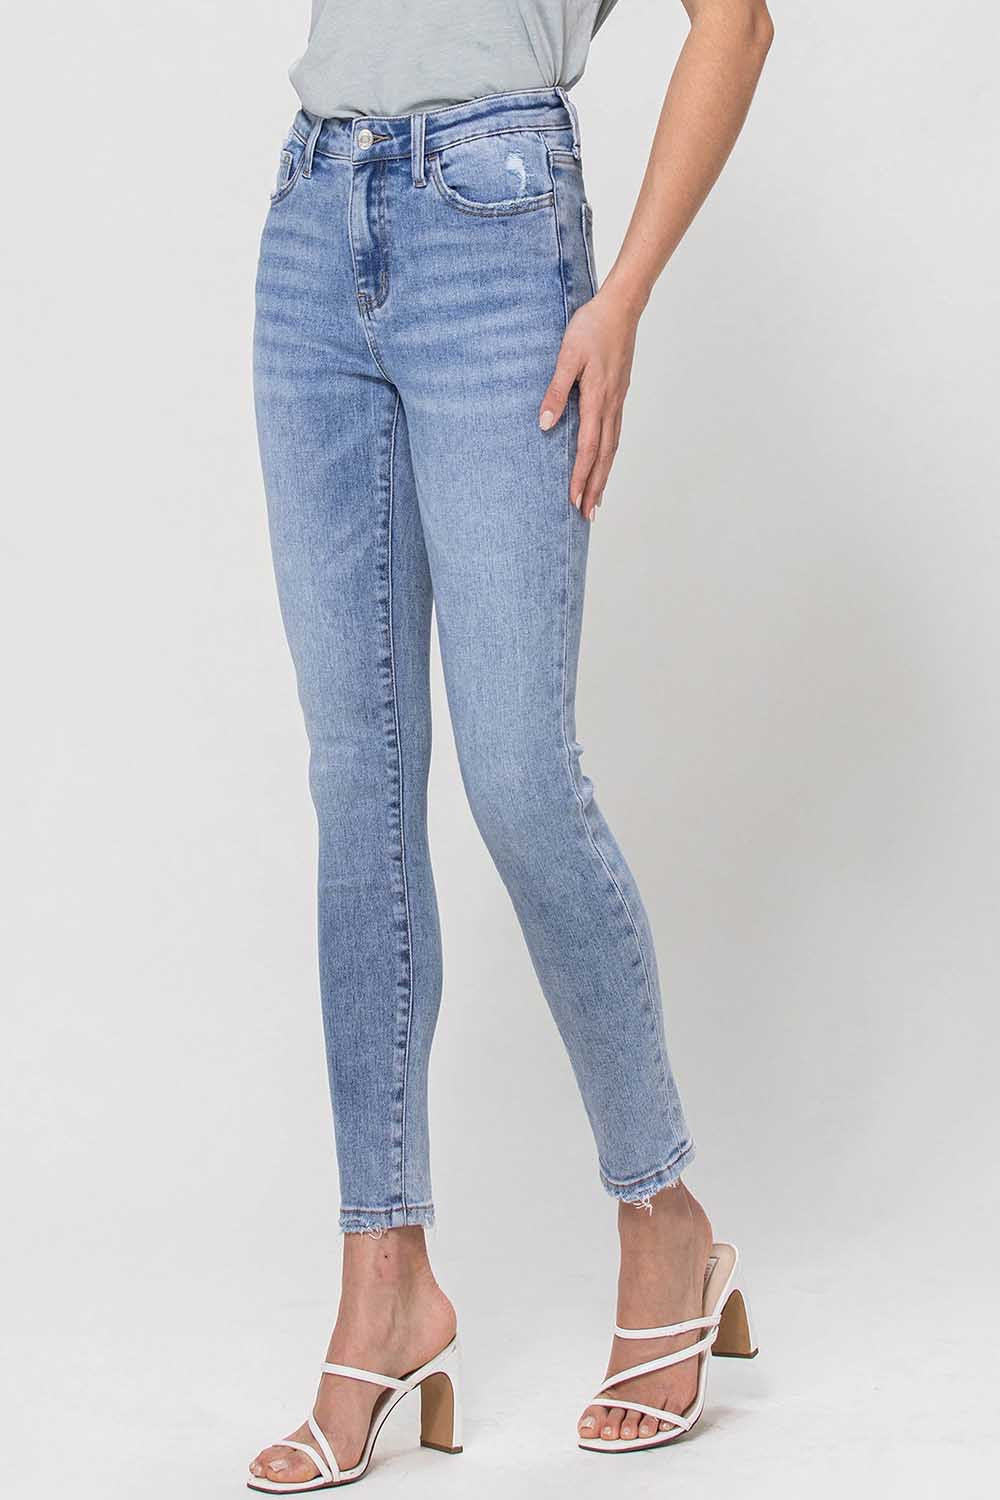 Beckie 90's High-Rise Skinny Jean